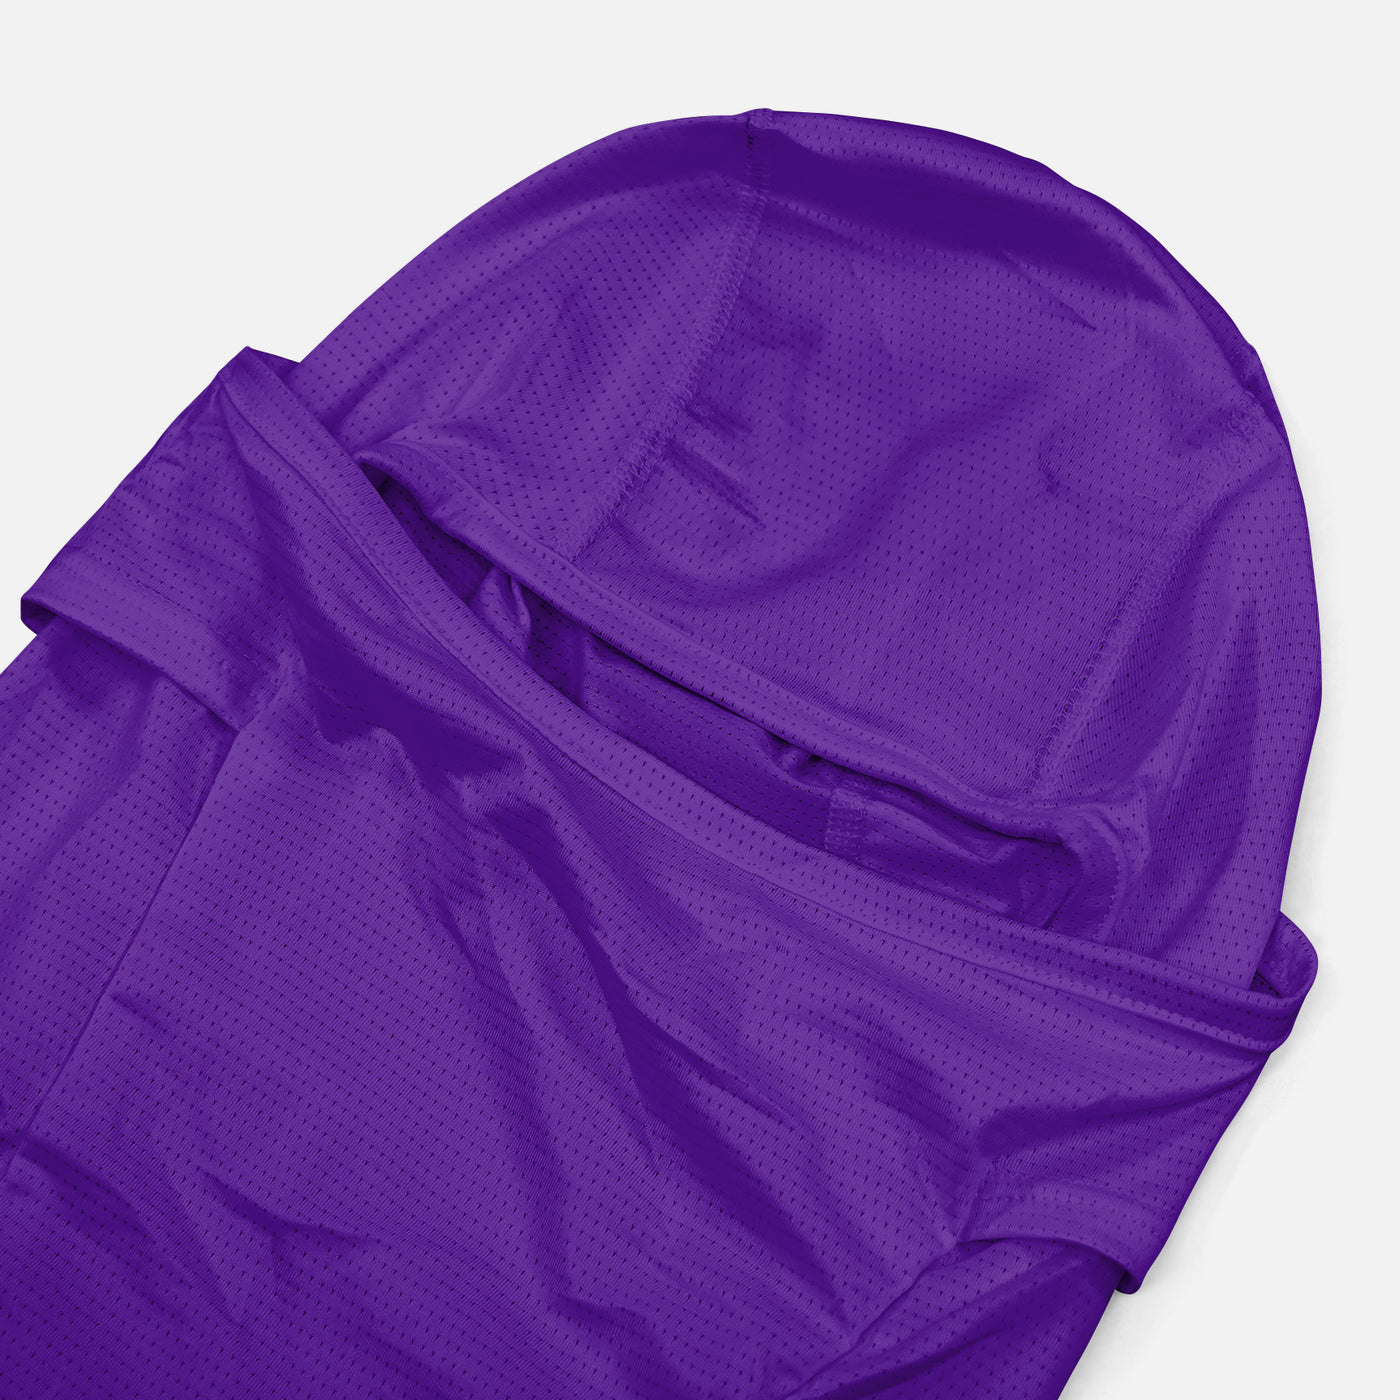 Hue Purple Loose-fitting Shiesty Mask